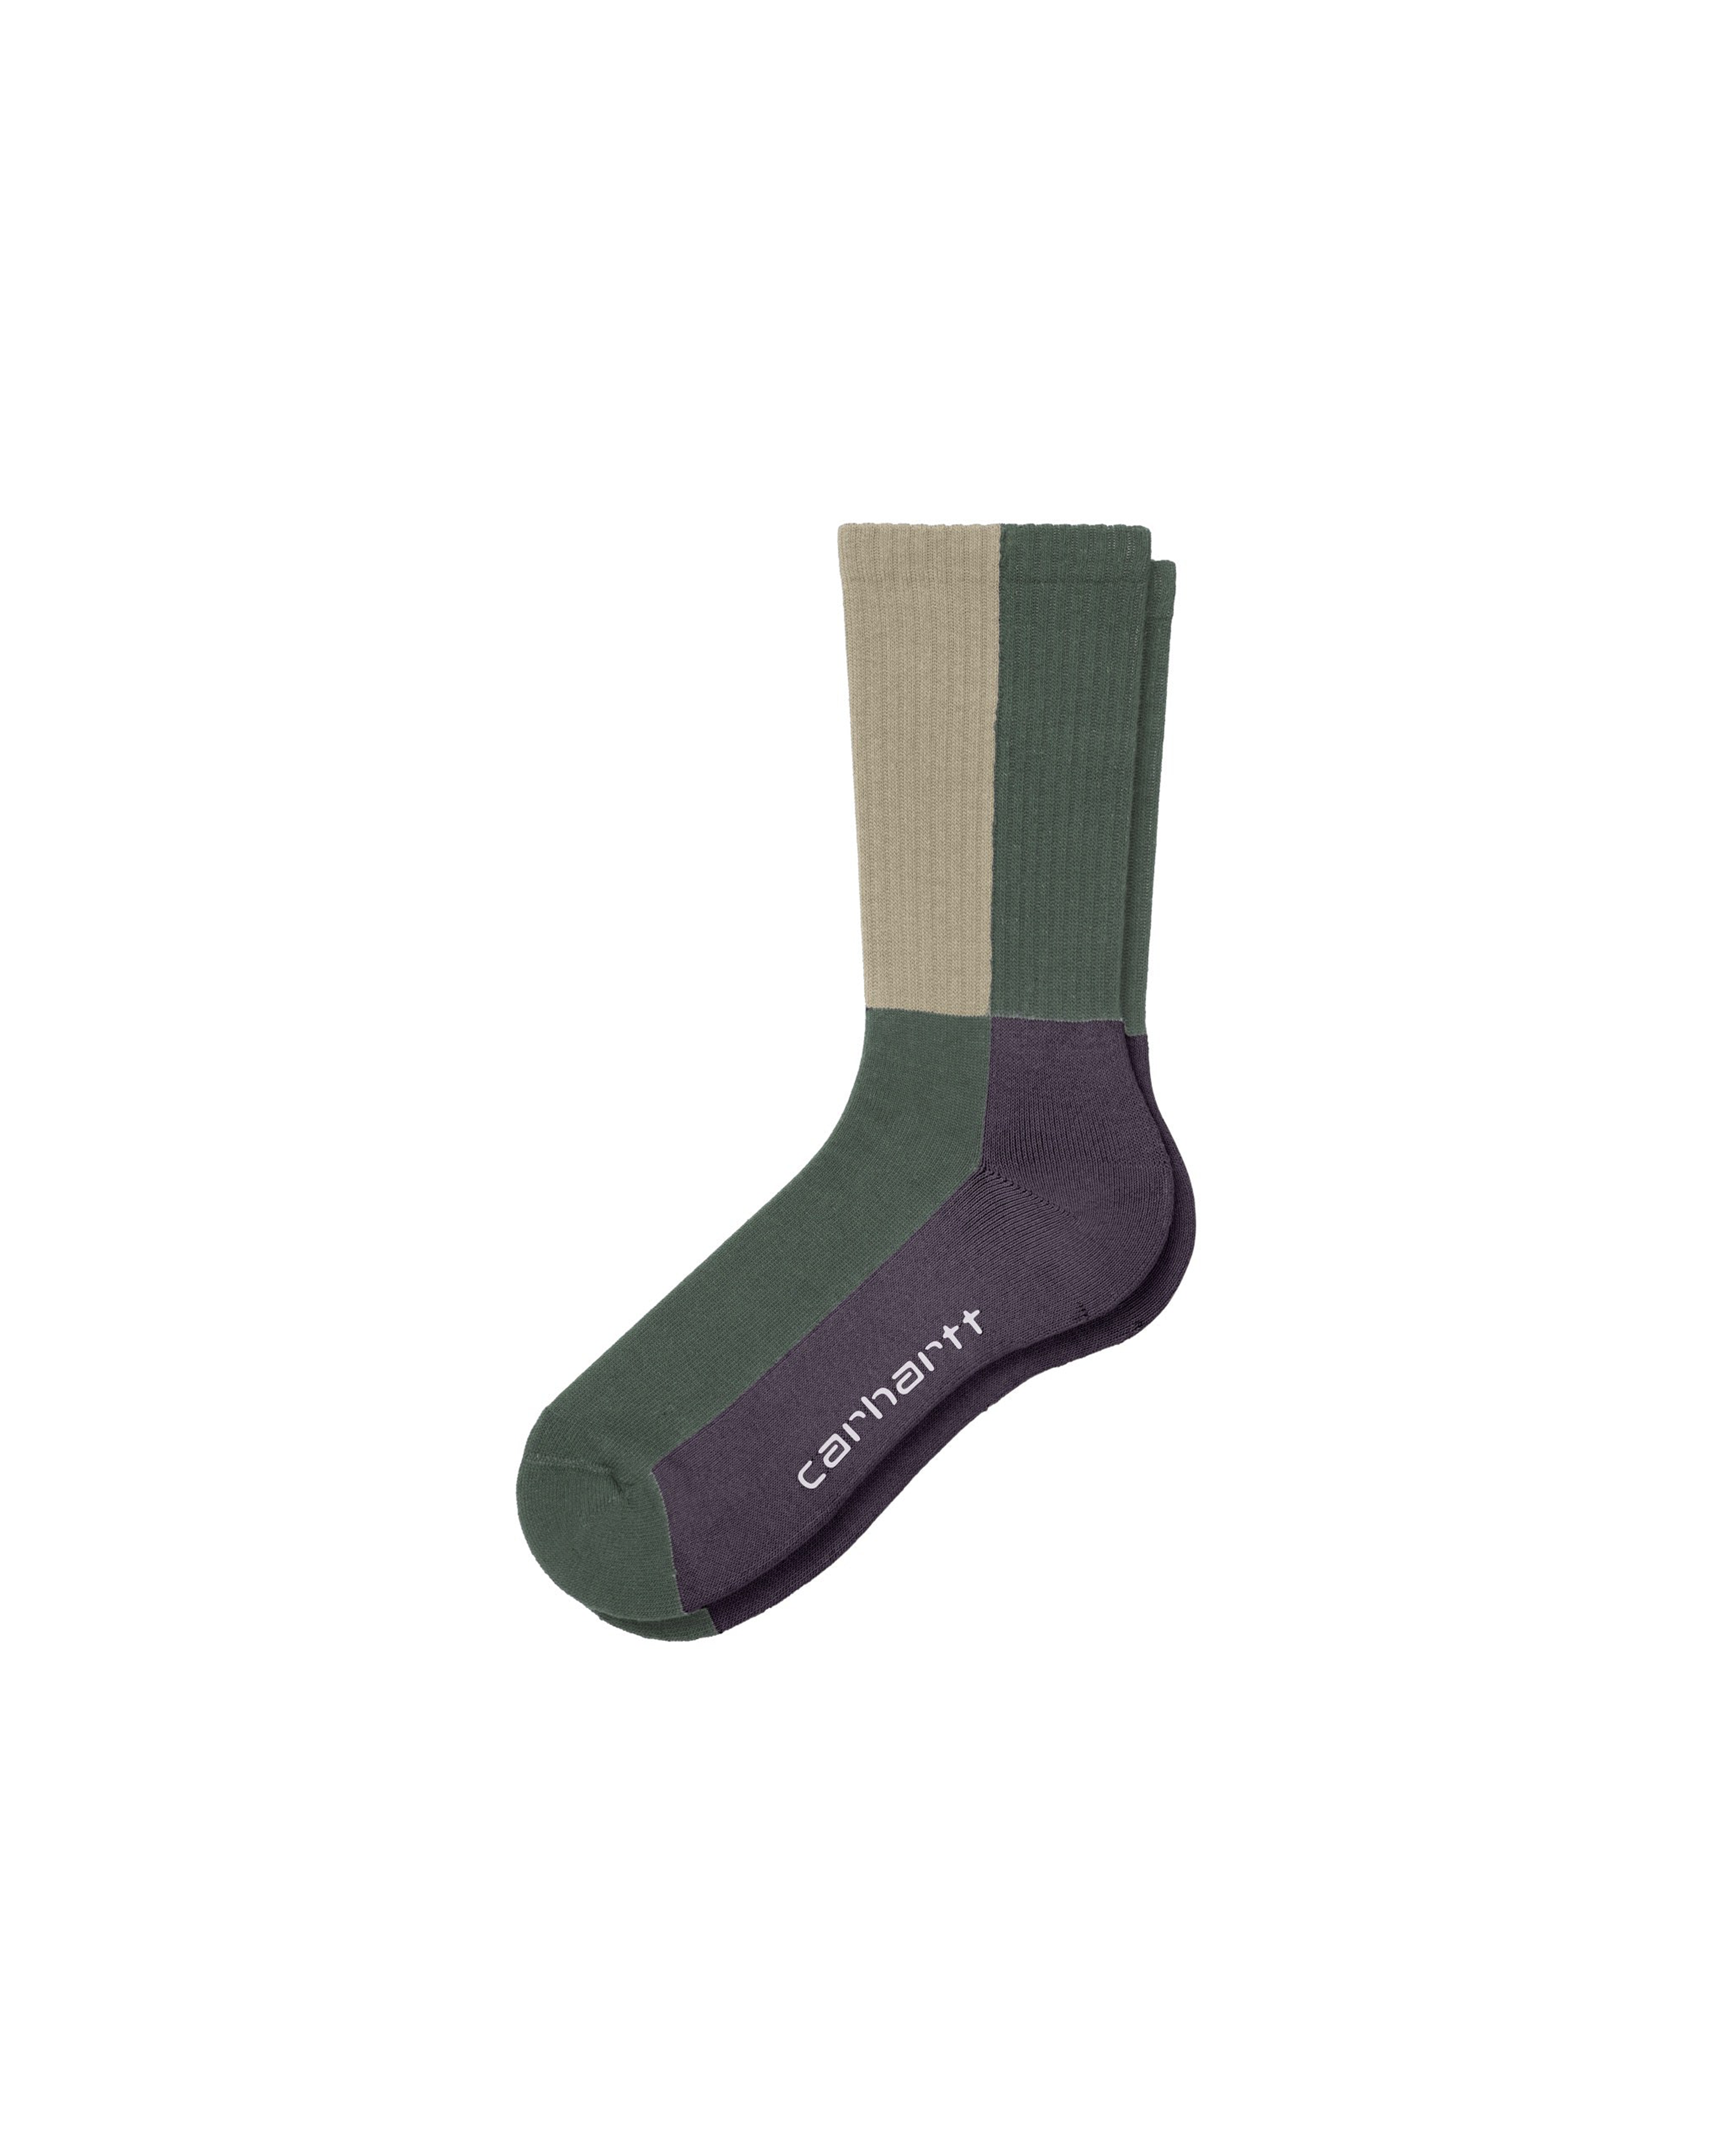 Valiant Socks - Artichoke / Wall / Boxwood